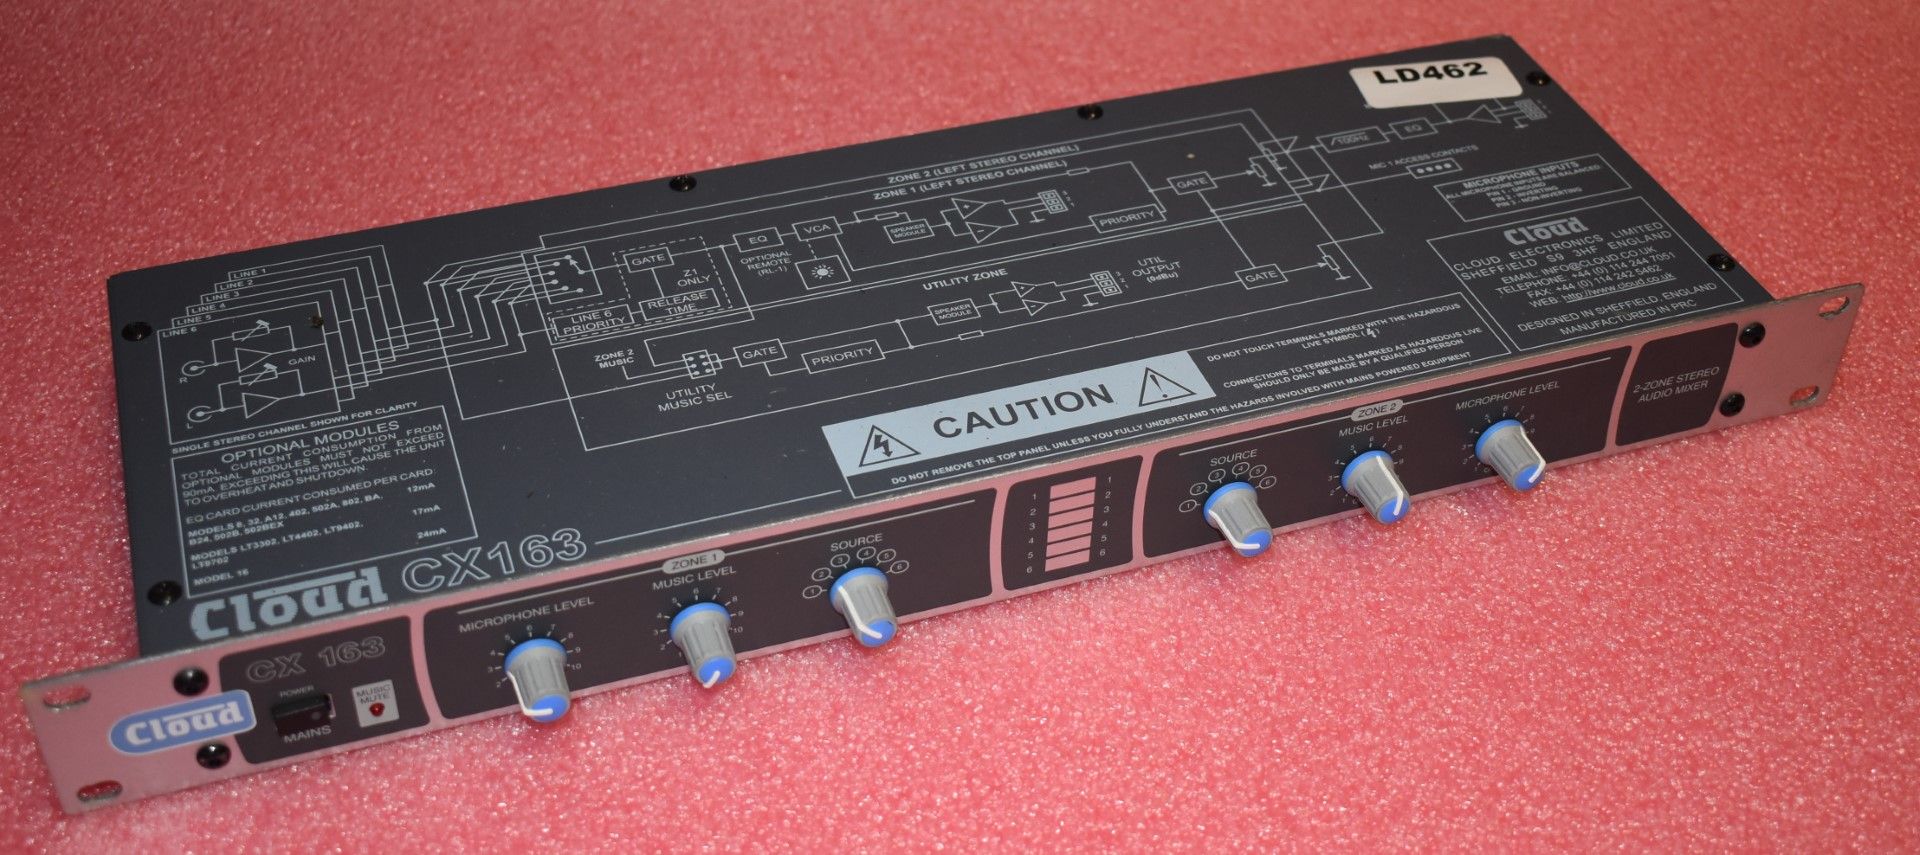 1 x Cloud CX163 Two Zone Audio Mixer - Rackmount UNIT - CL409 - Ref LD462 - Location: Altrincham